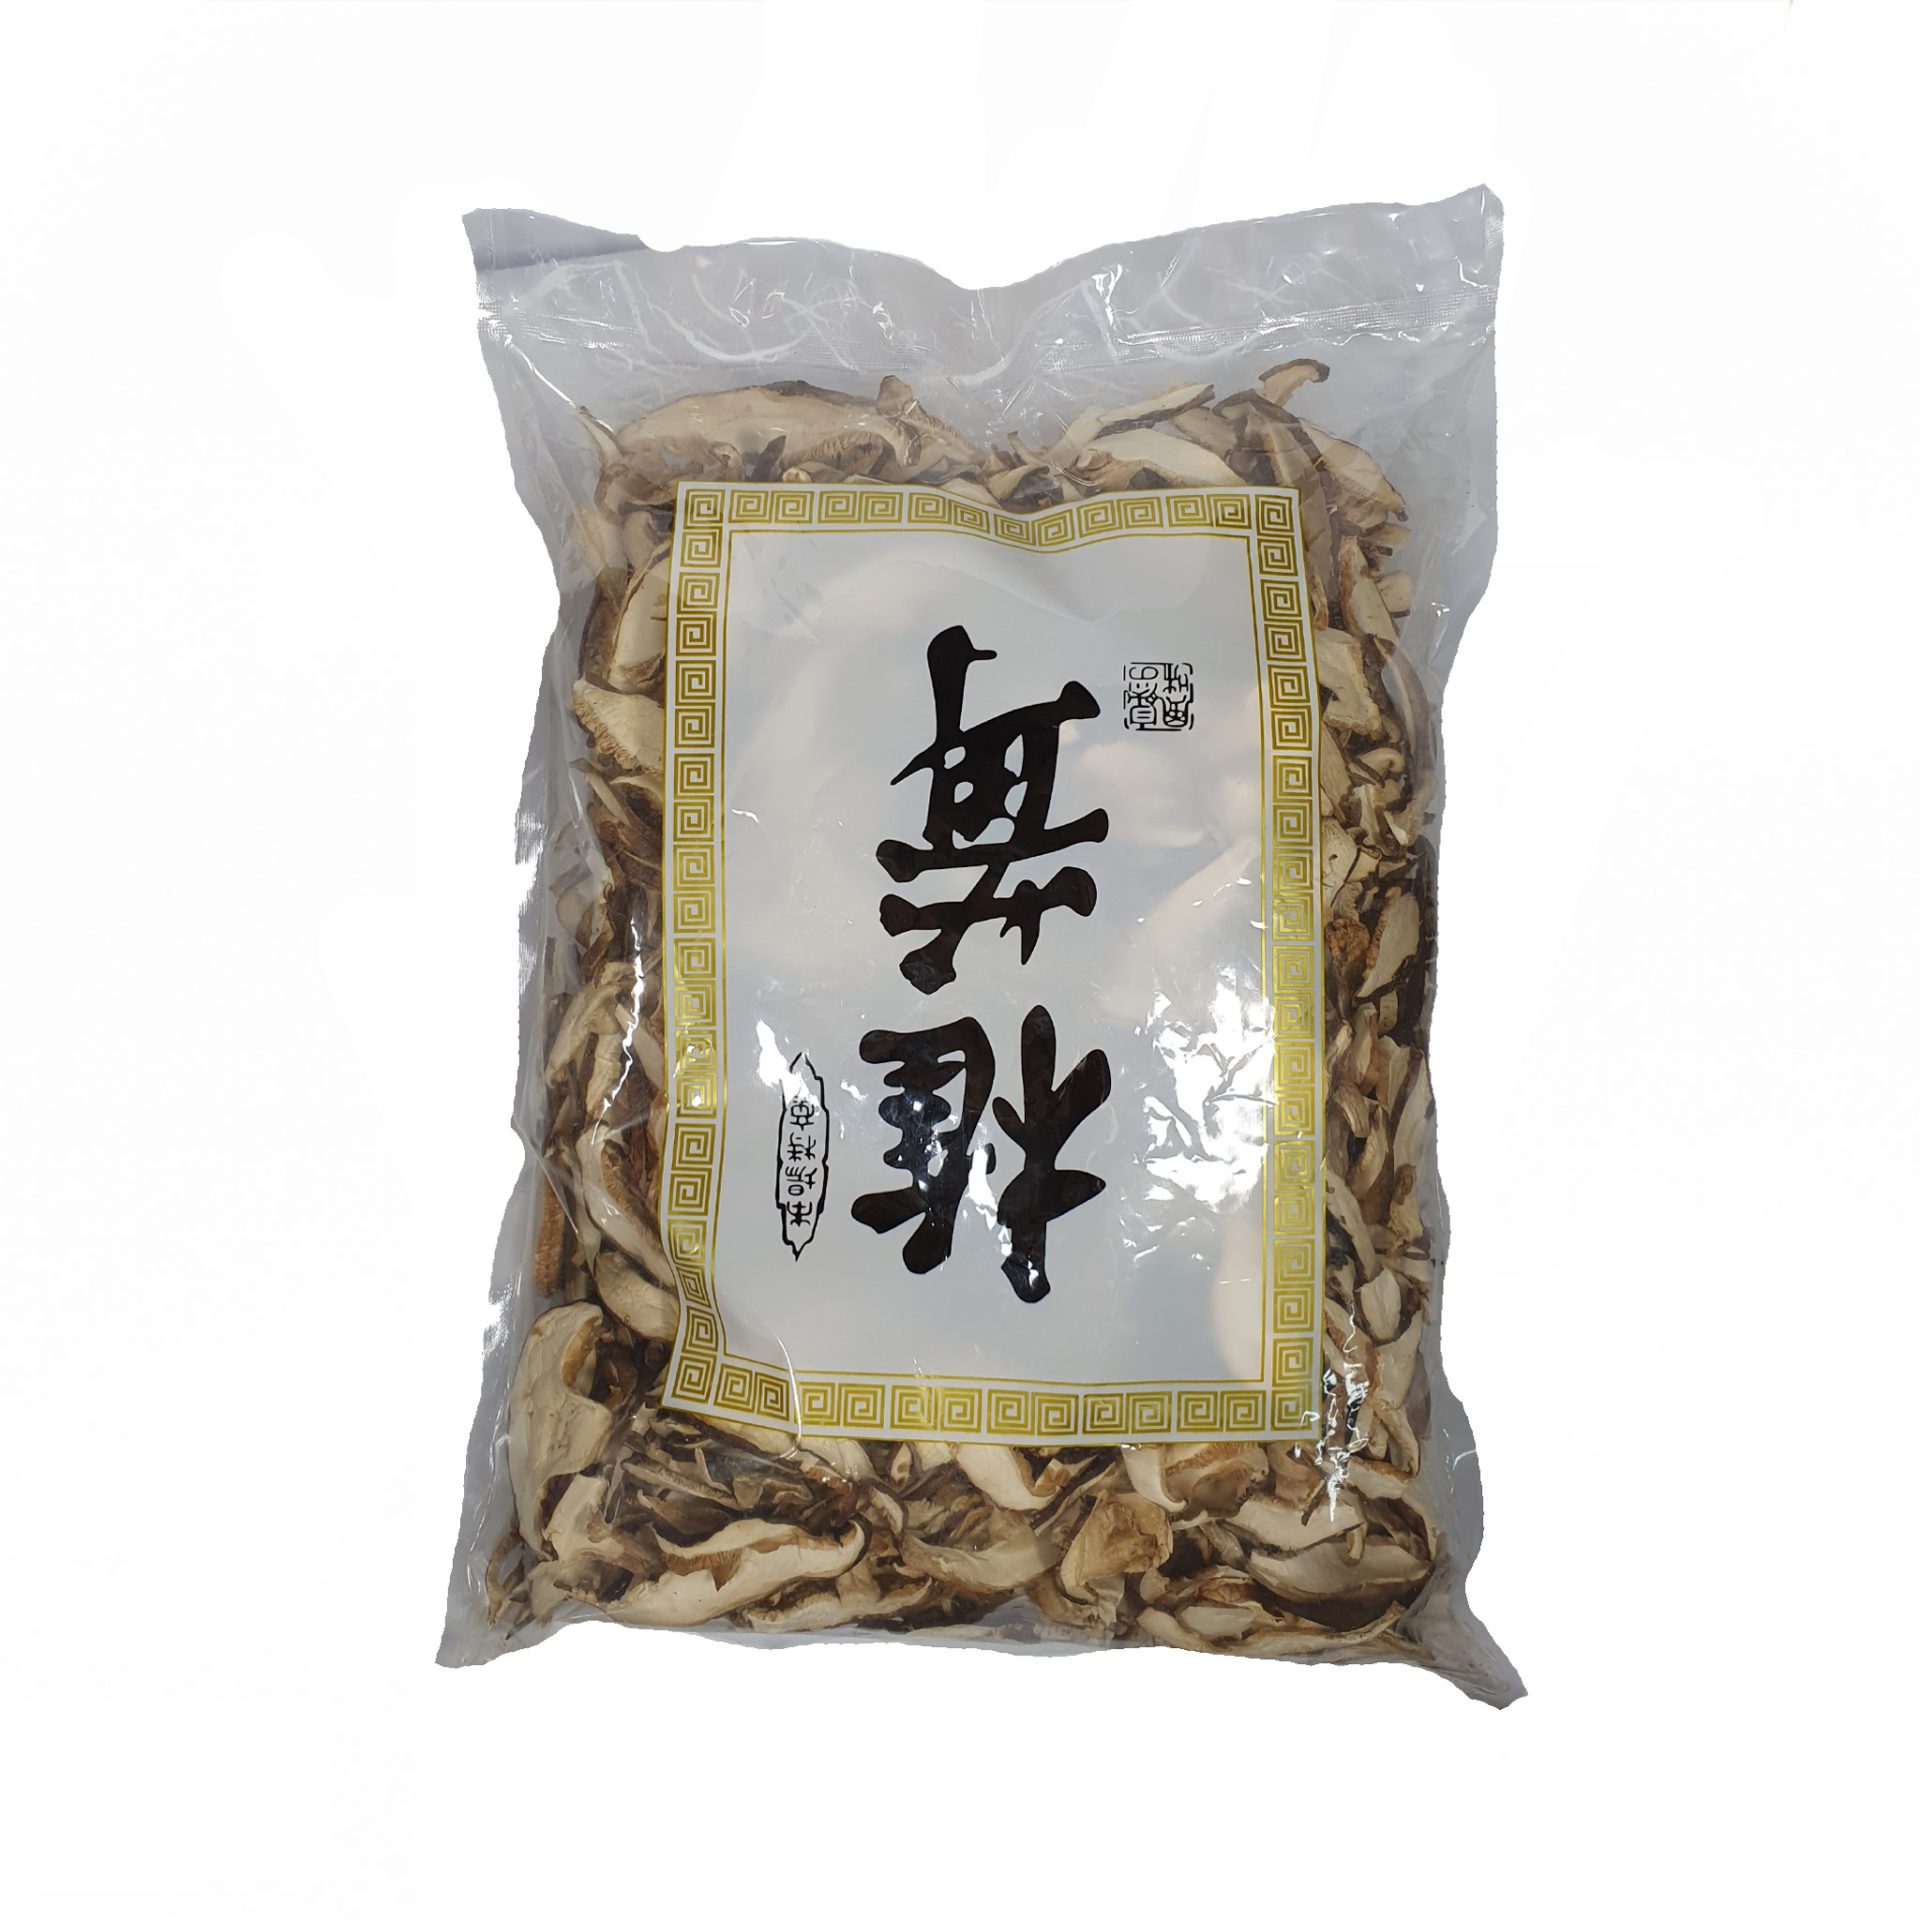 Cogumelo Shitake Desidratado Inteiro GW 500g - Bonsai Mercearia